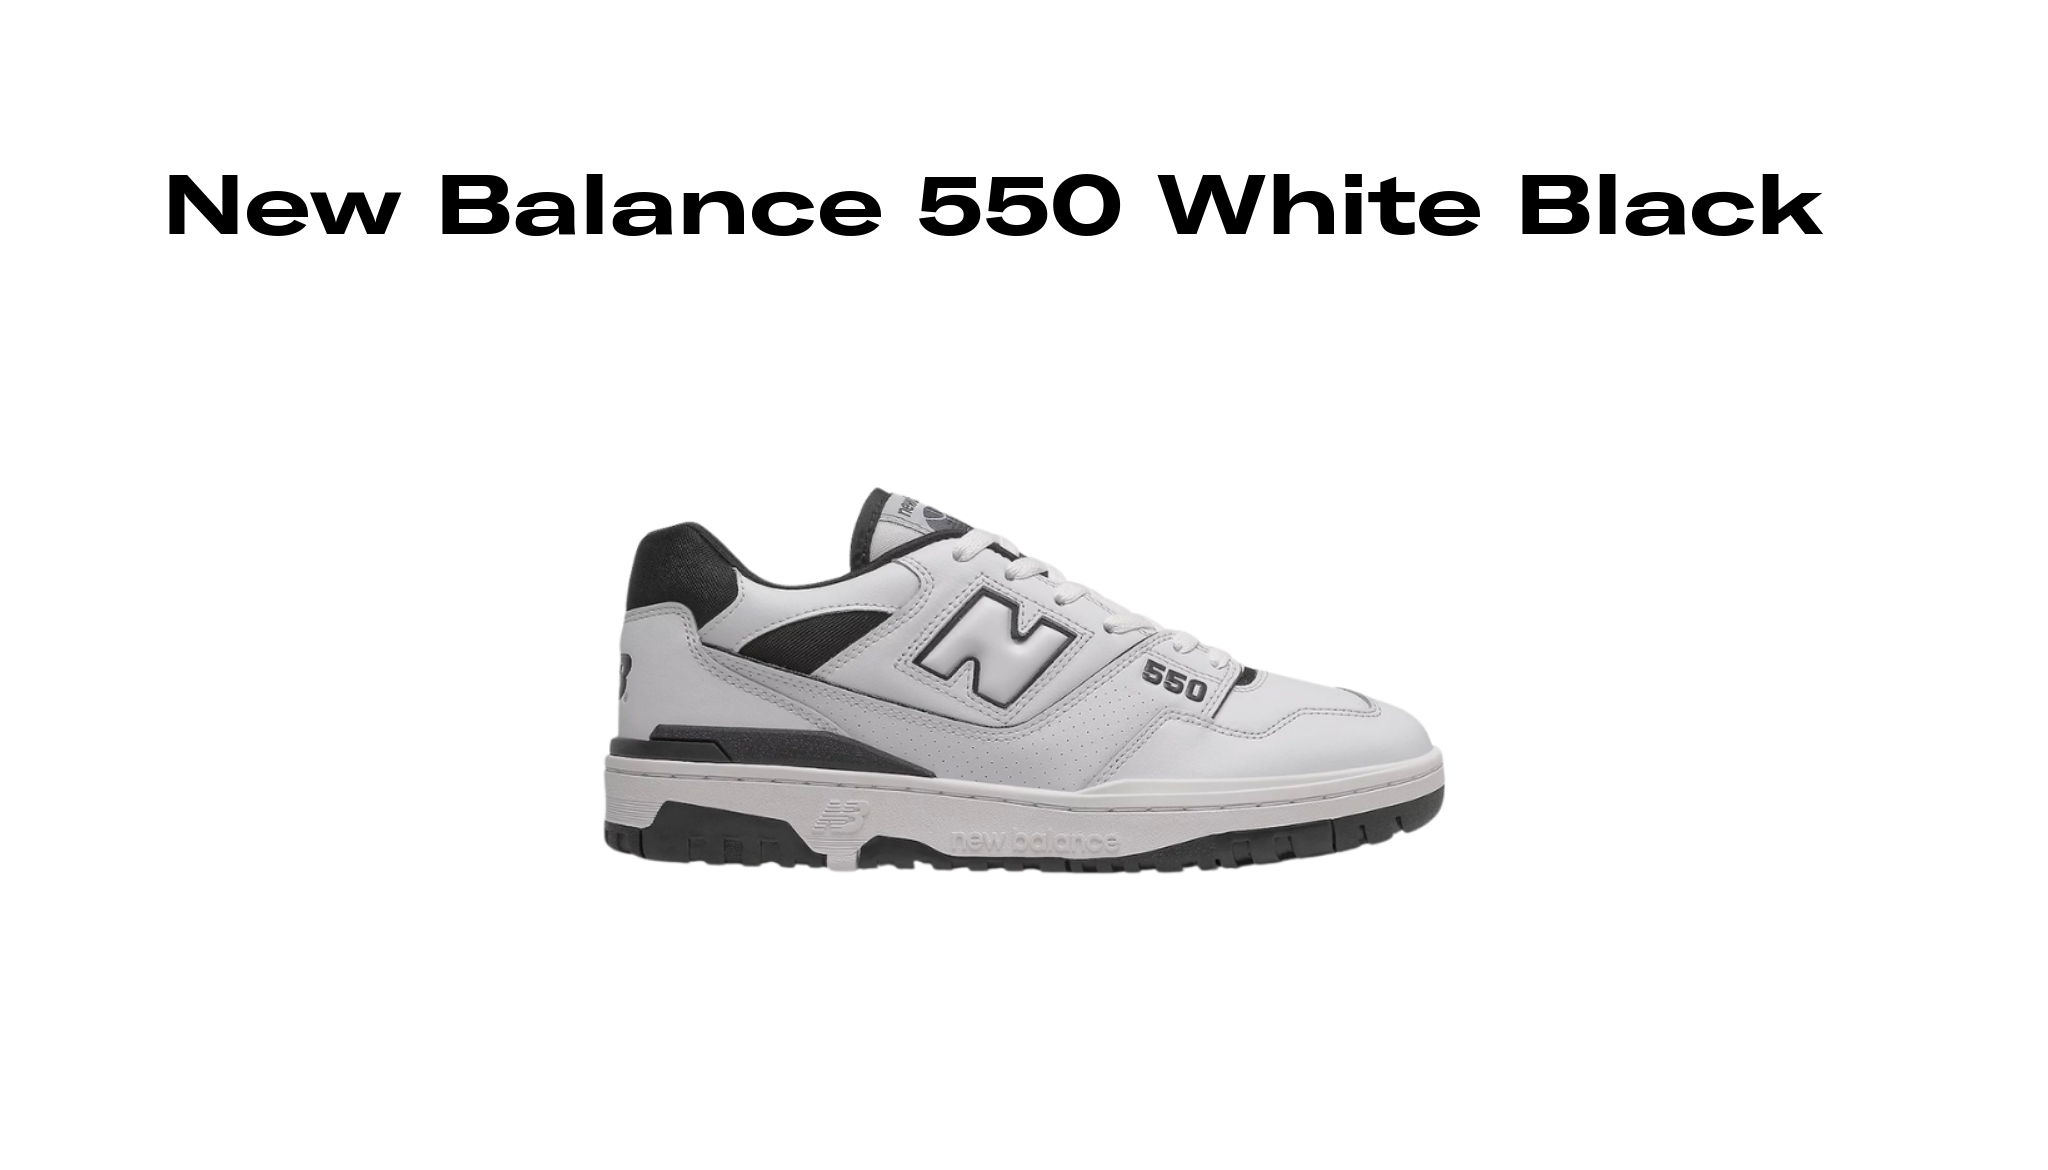 New Balance 550 White Black, Raffles and Release Date | Sole Retriever